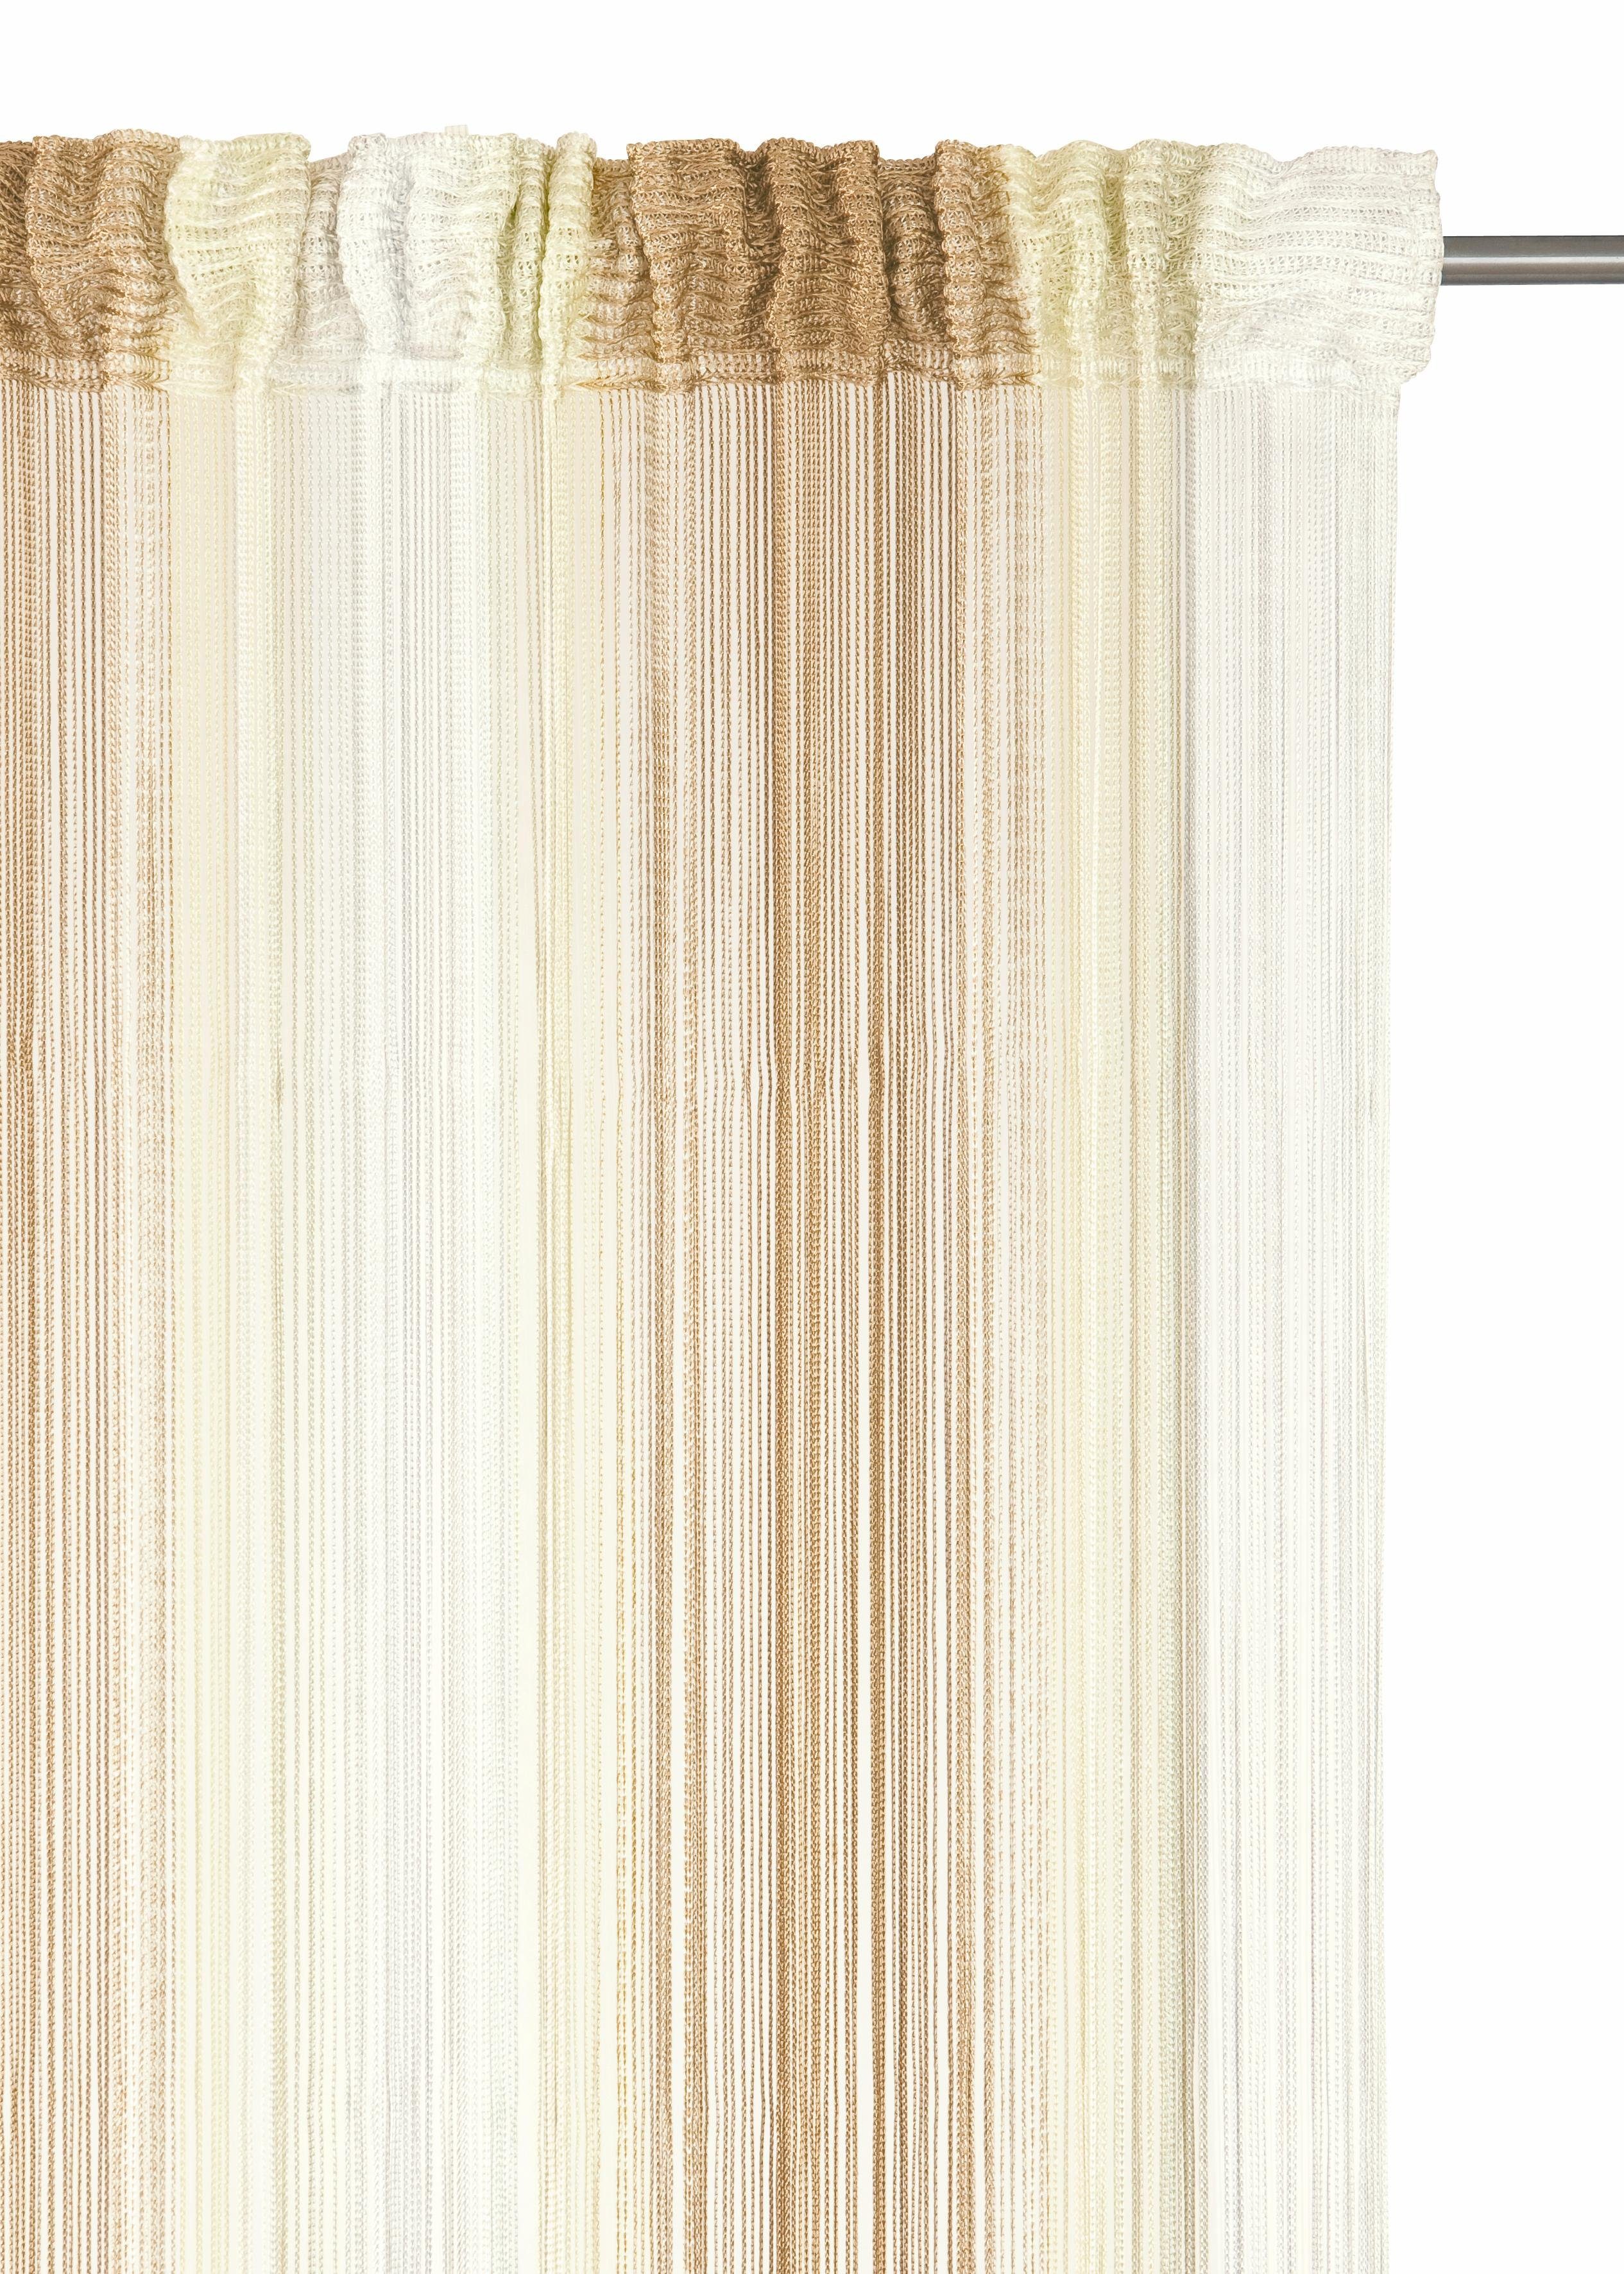 Fadenvorhang Rebecca, Weckbrodt, kürzbar St), transparent, Fadengardine, champagner/karamell (1 Gardine, Multifunktionsband halbtransparent, Insektenschutz